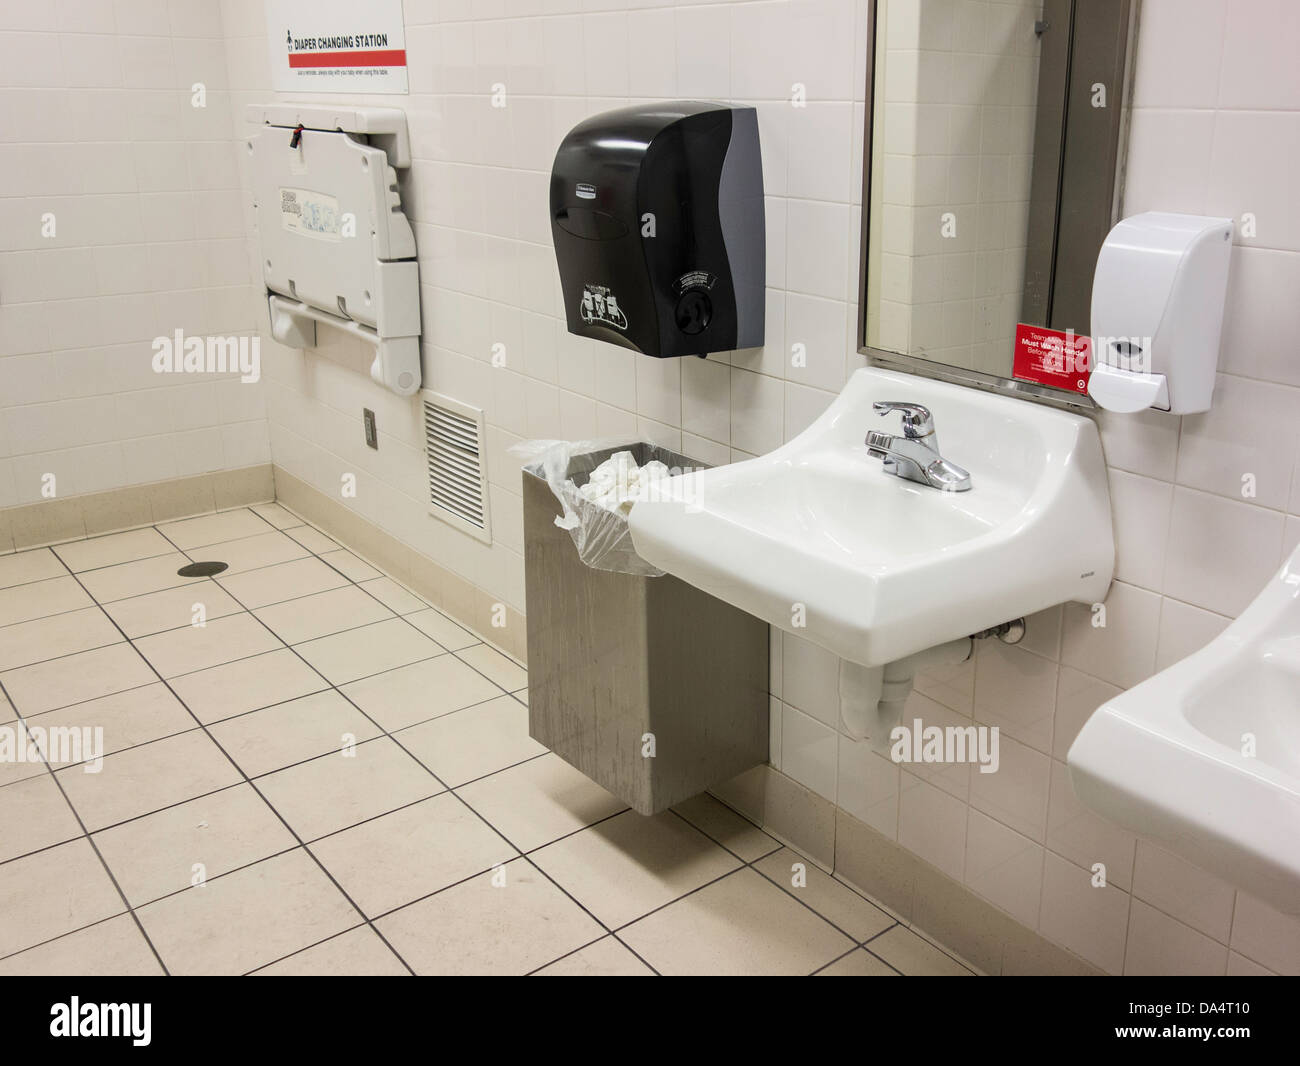 Public bathroom in a shopping mall, lavatories, soap dispenser and mirrors. Oklahoma City, Oklahoma, USA. Stock Photo